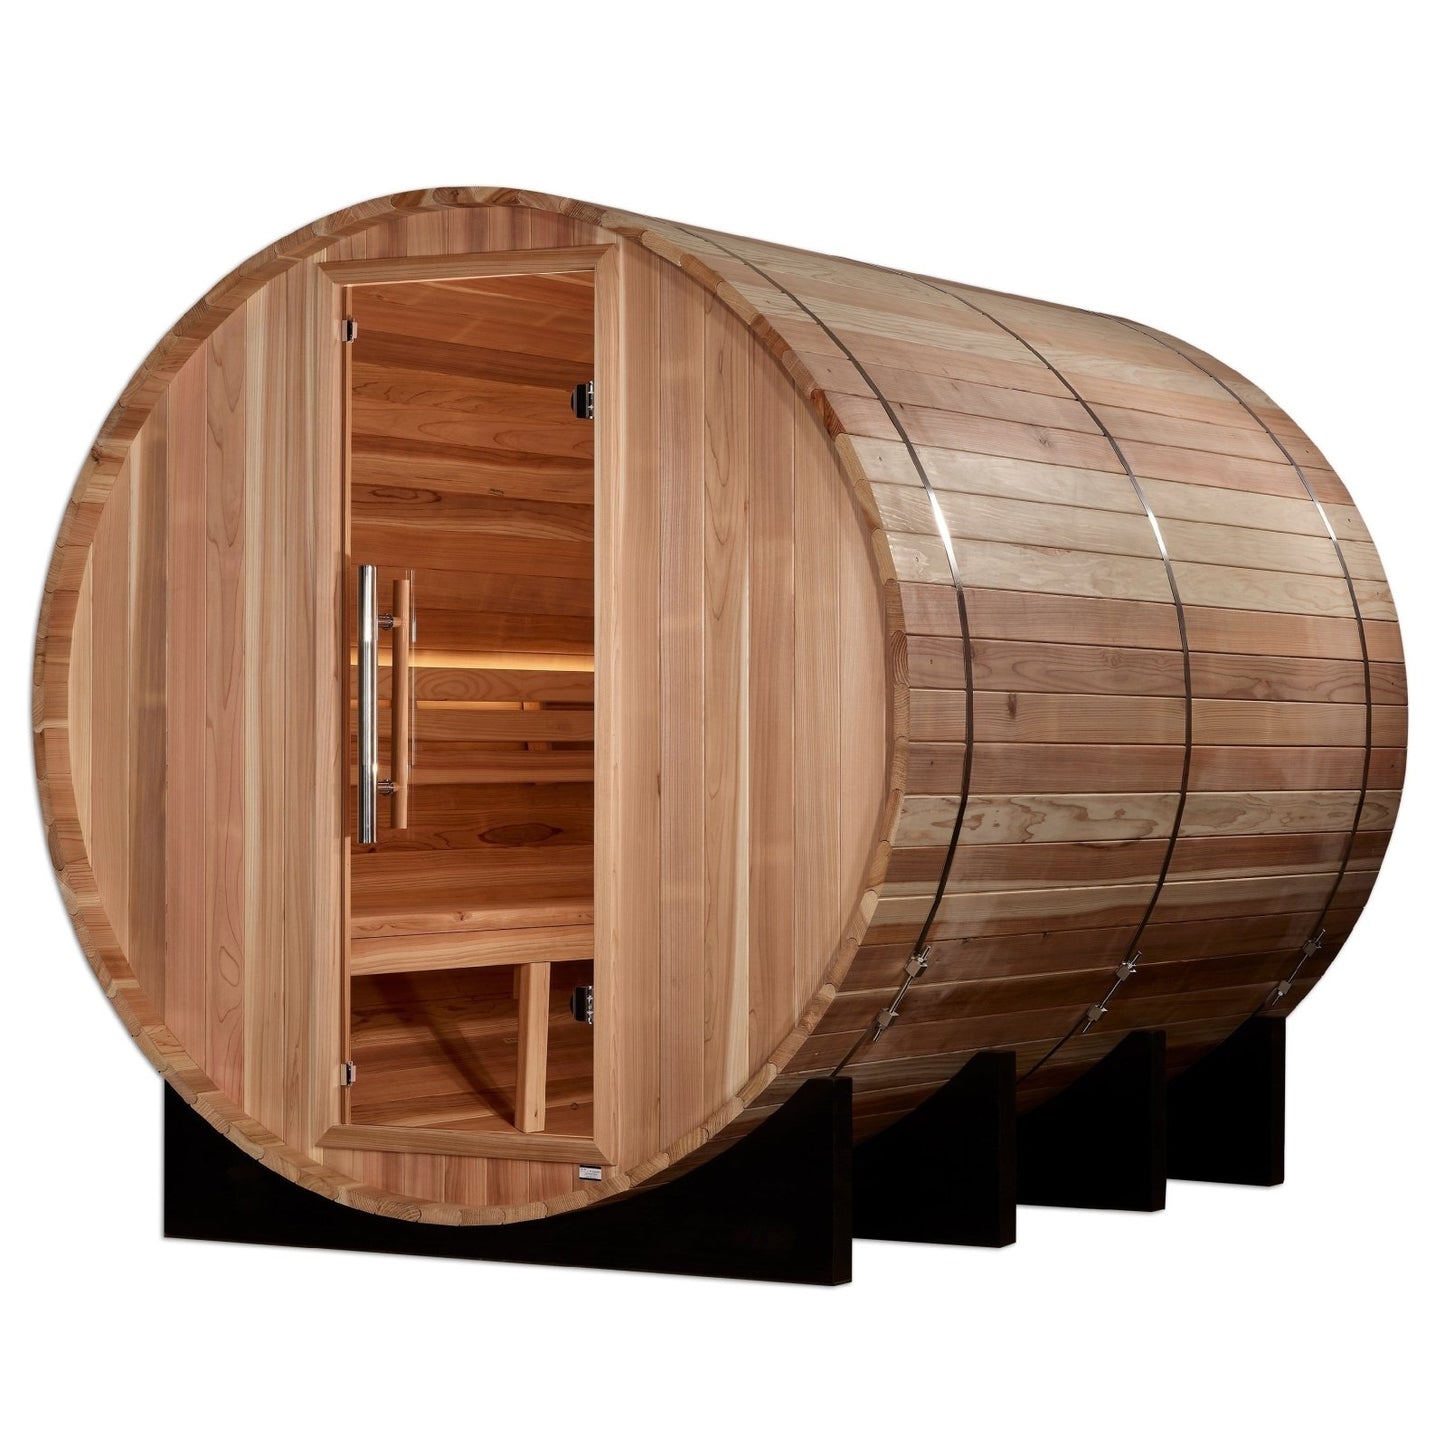 Golden Designs "Klosters" 6-Person Barrel Traditional Steam Sauna - Pacific Cedar - GDI-B006-01